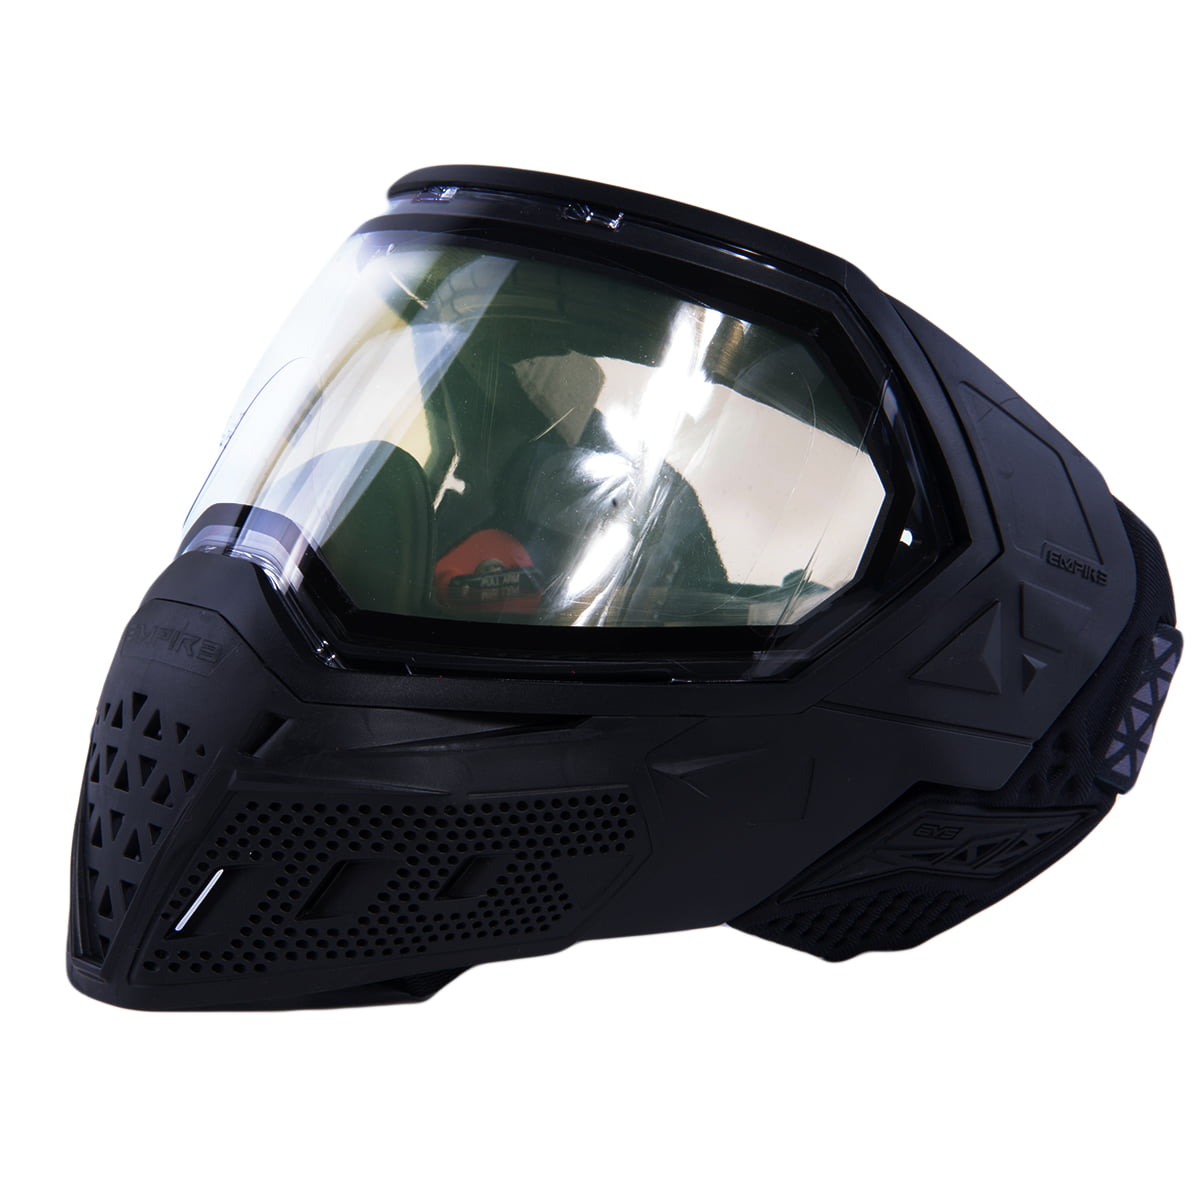 2 Thermal Lenses Tan/Black Empire EVS Paintball Mask/Goggle